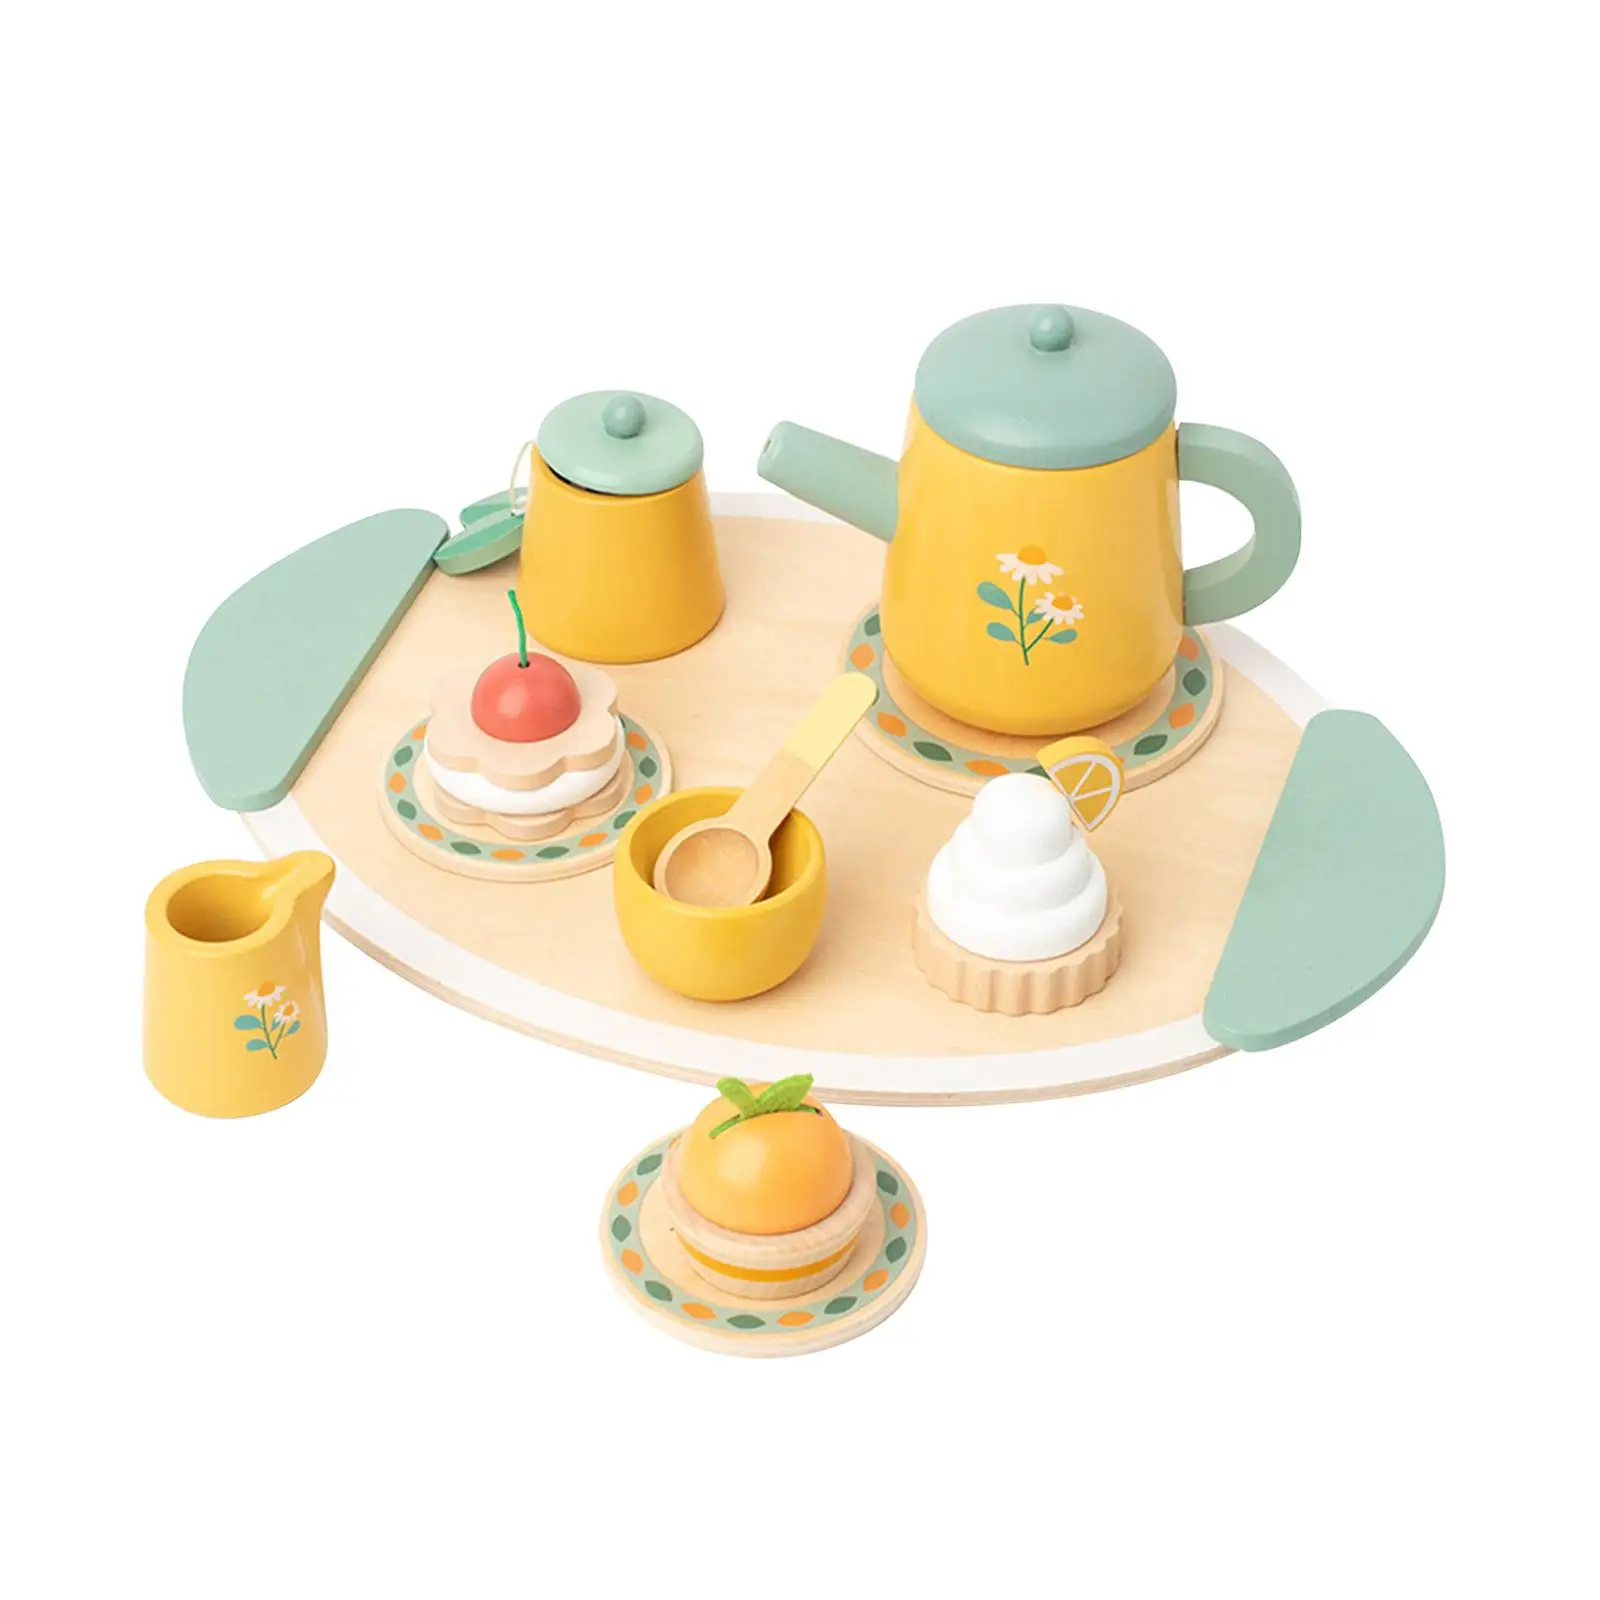 Wooden Tea Party Set Mini Teapot Plates Afternoon Tea Set Miniature Decor Cake Toys Miniature Tea Cups Set for Age 3 4 5 6